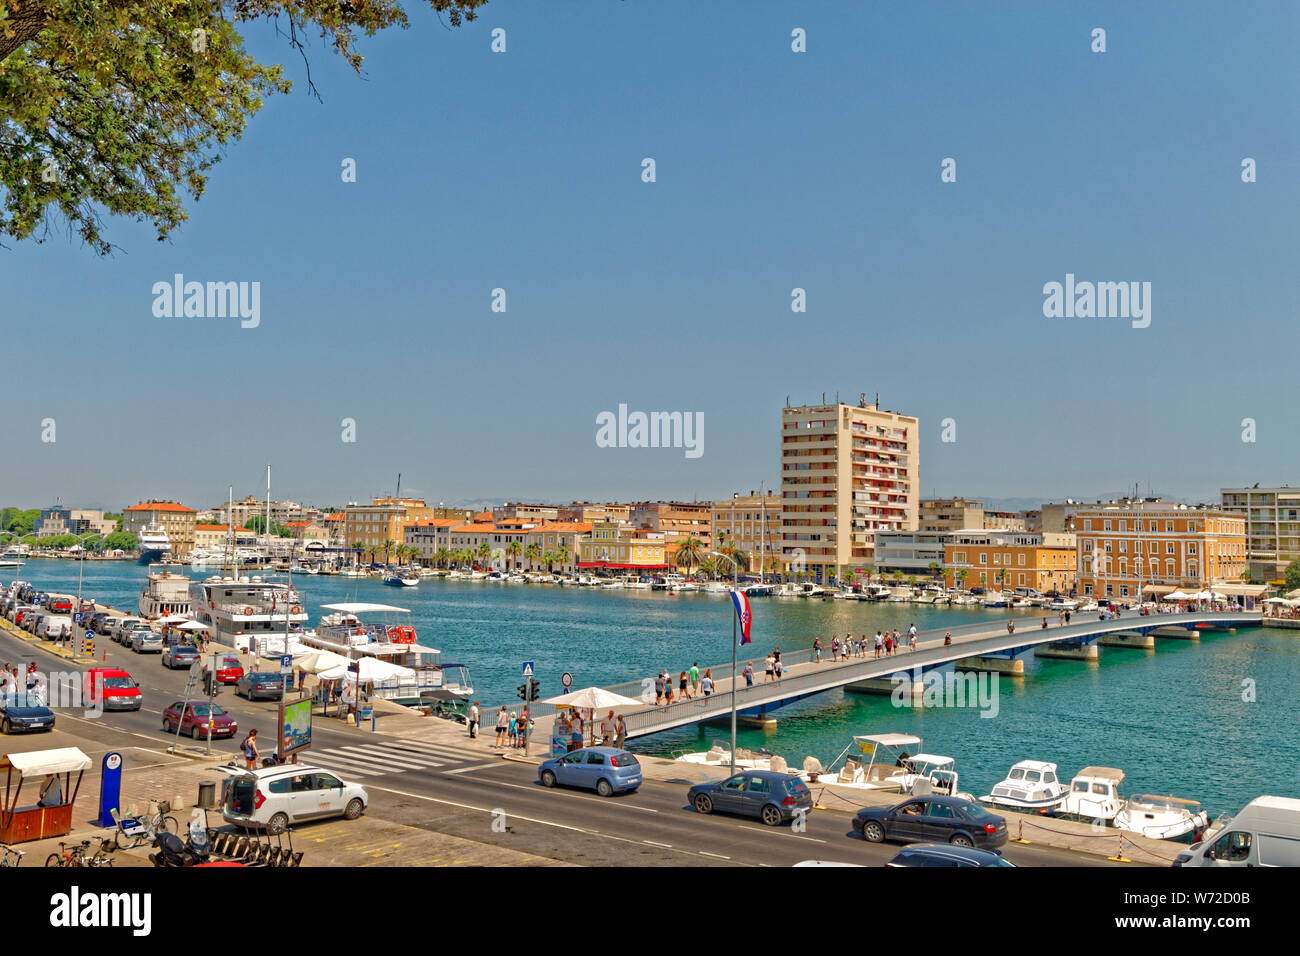 Waterfront an der Altstadt von Zadar, Zadar, Kroatien. Stockfoto